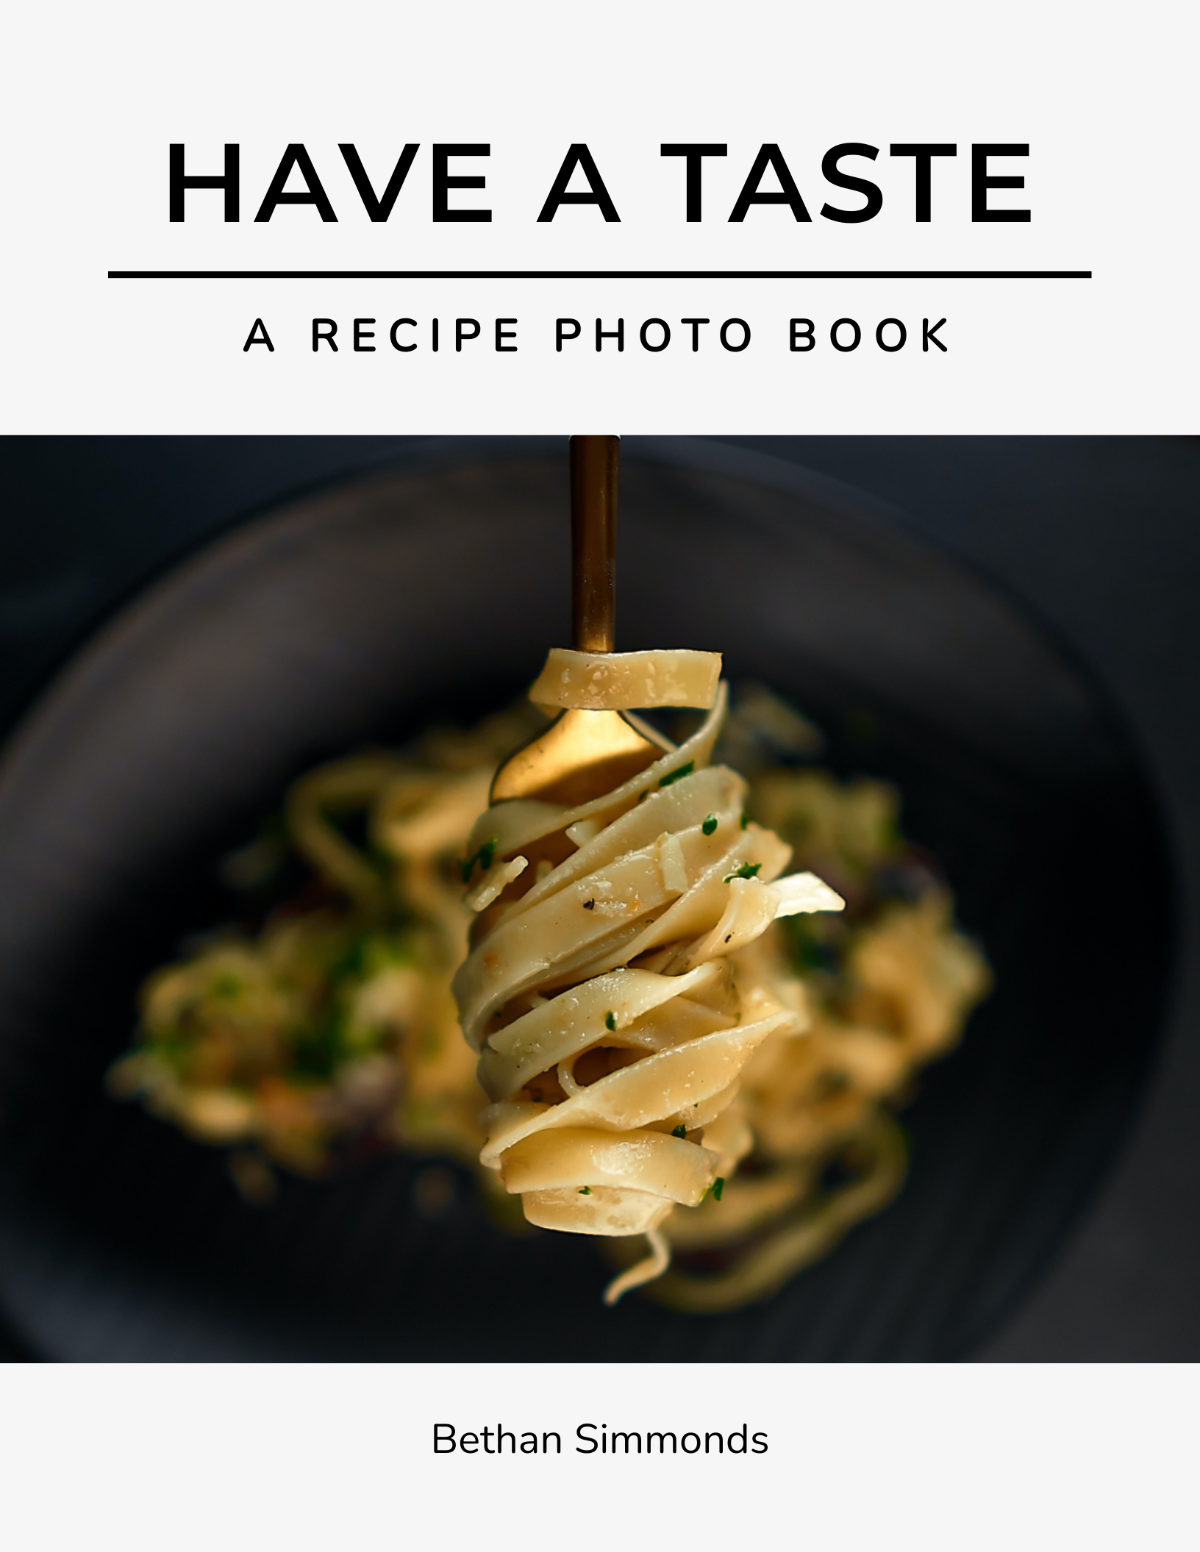 Free Recipe Photo Book Template